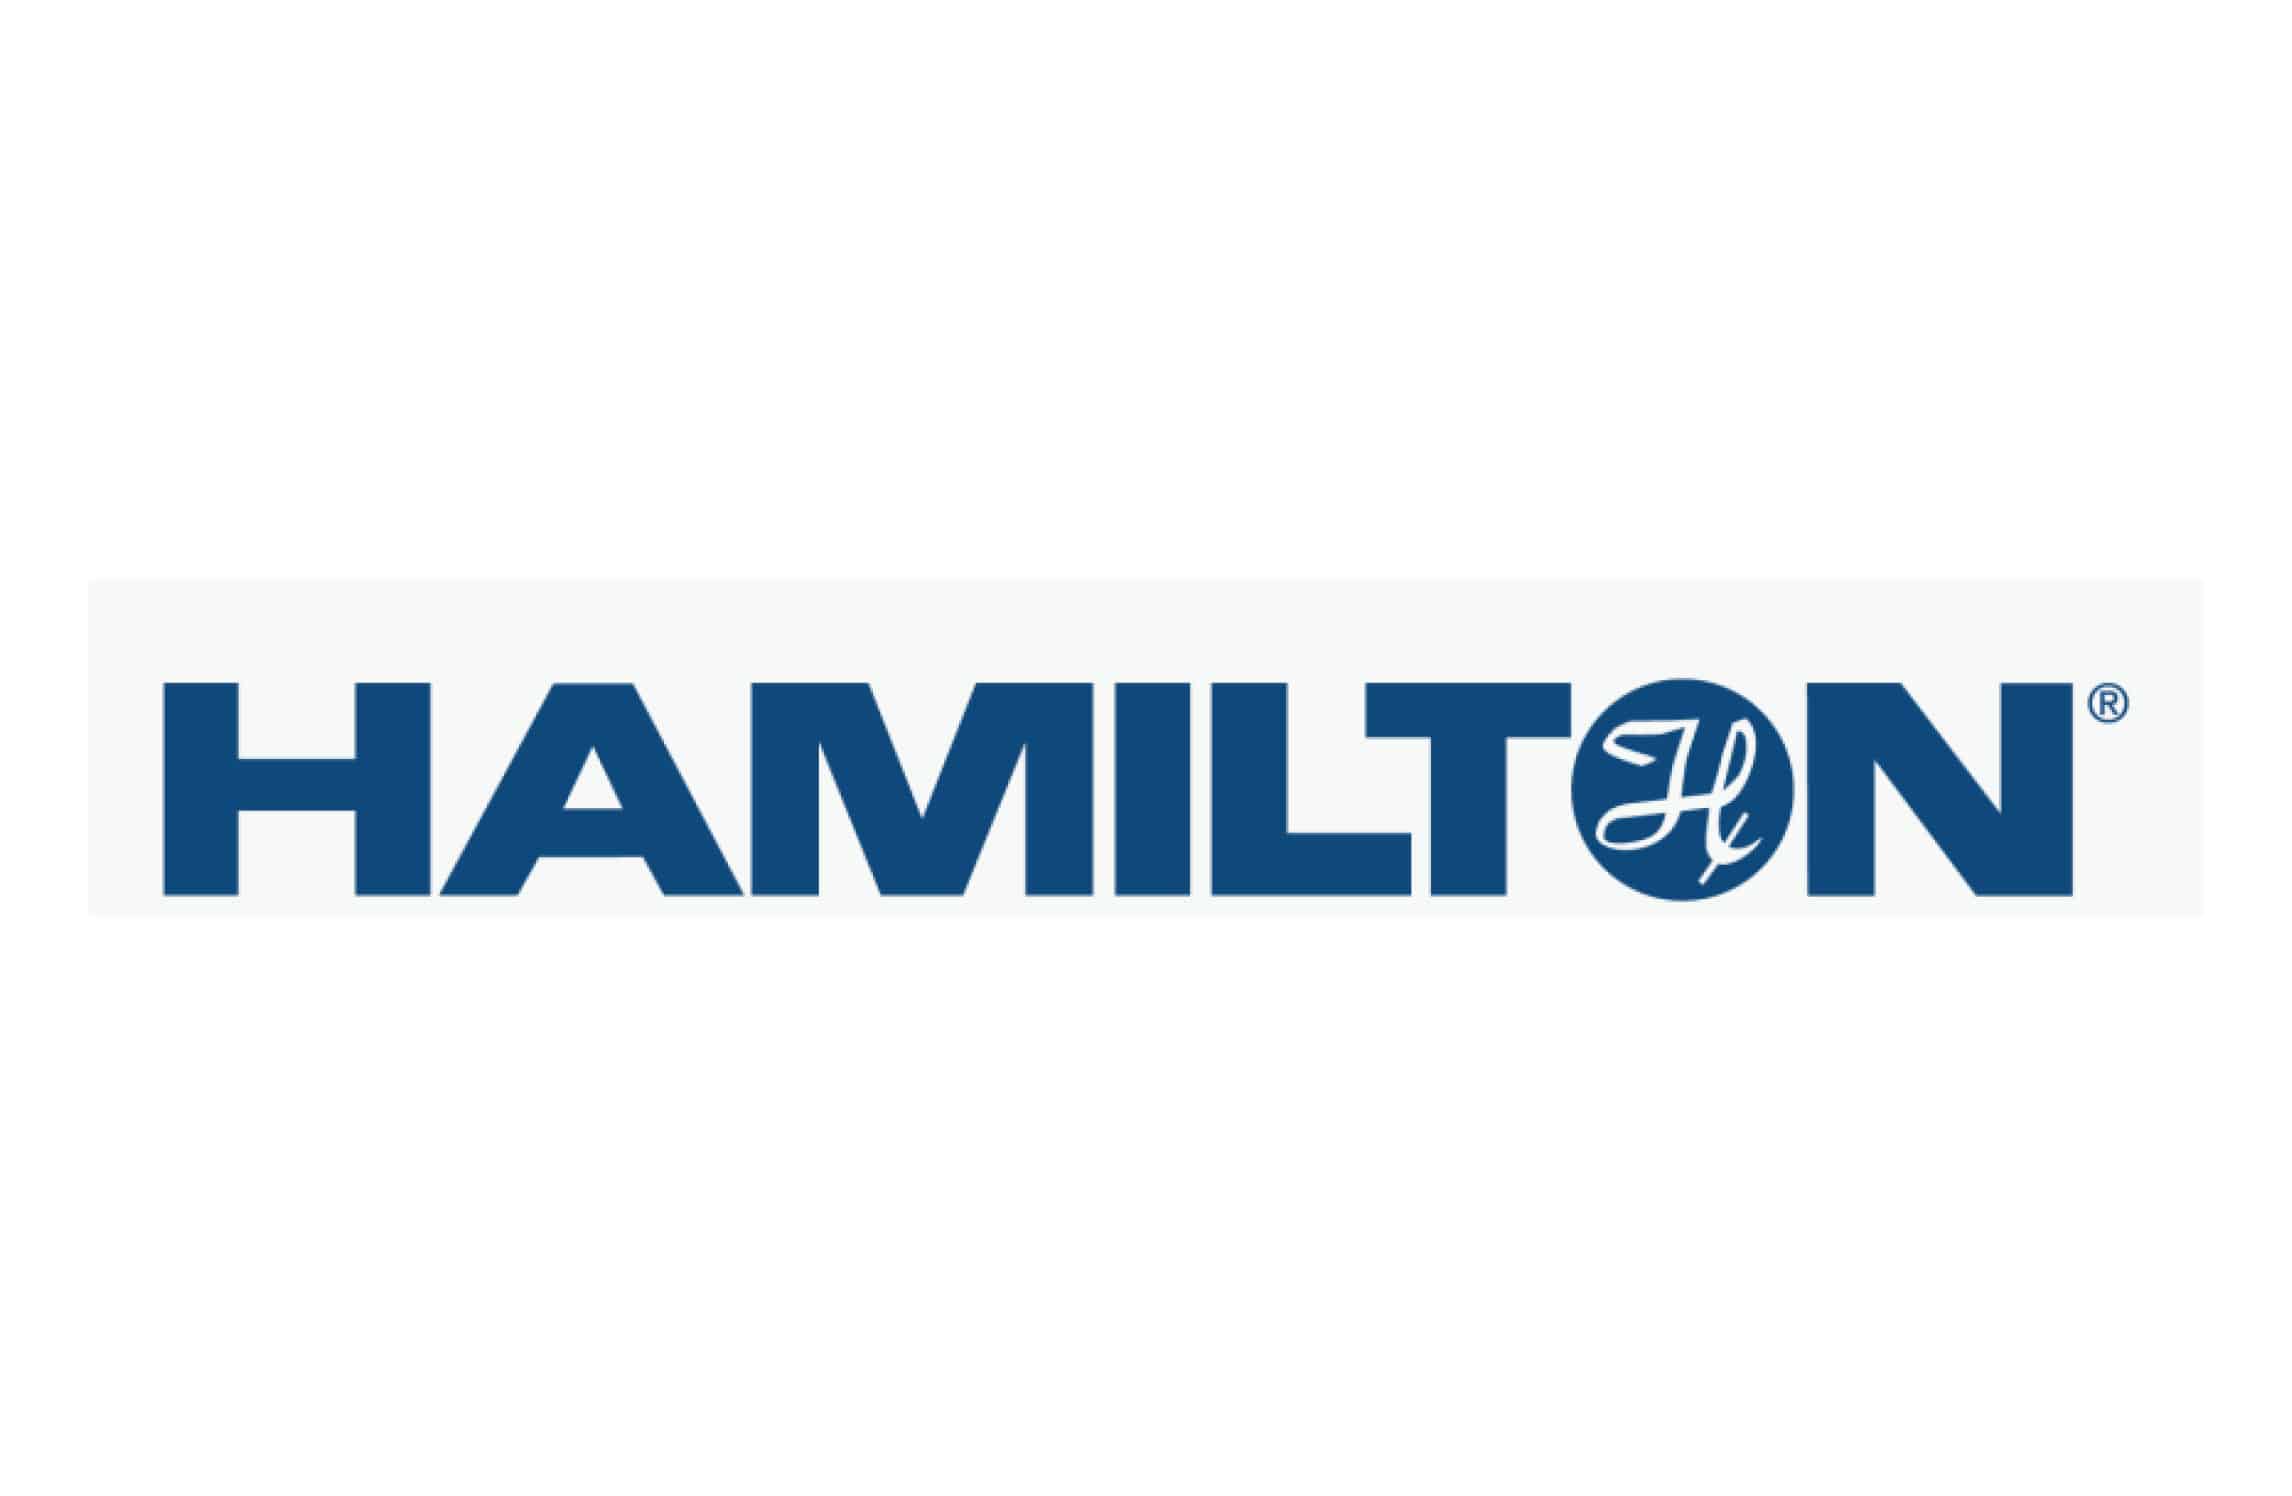 Hamilton logo